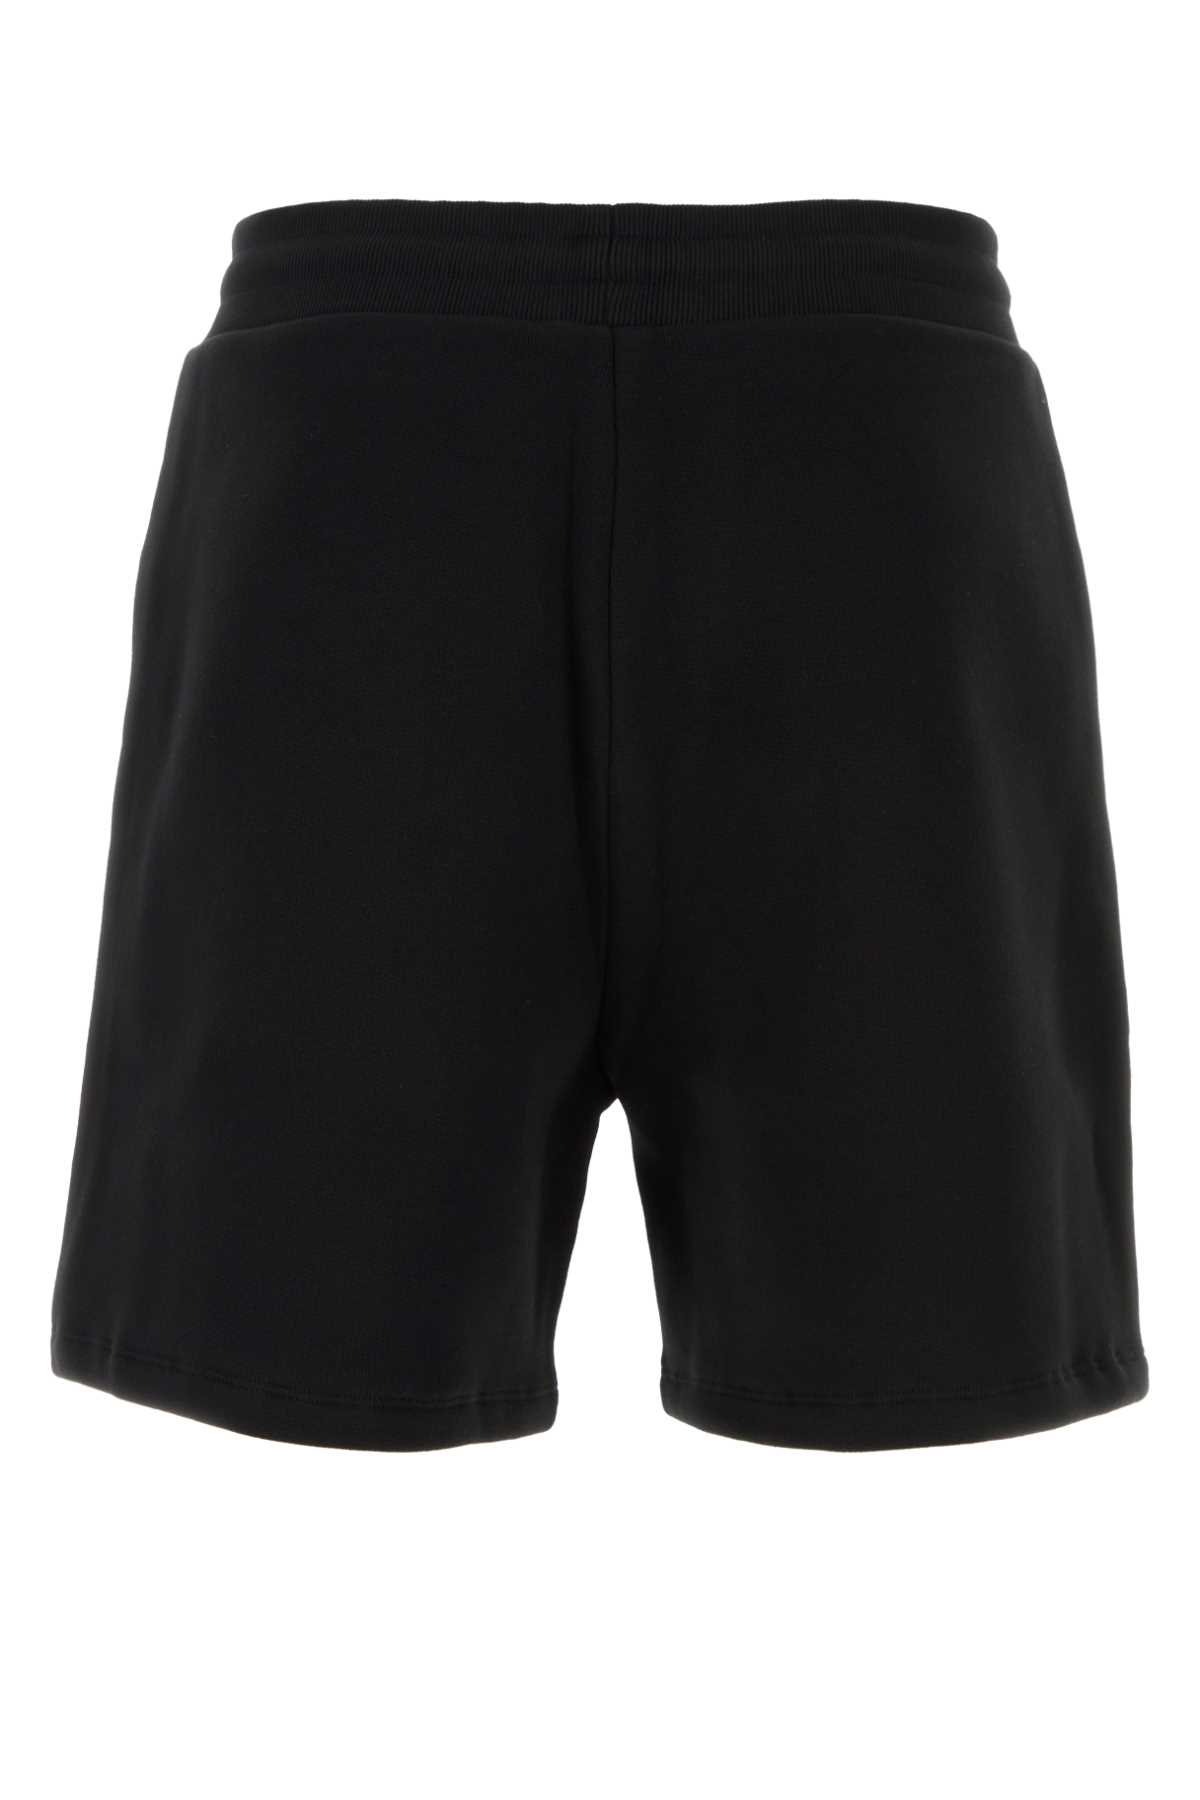 Shop Ami Alexandre Mattiussi Black Cotton Blend Bermuda Shorts